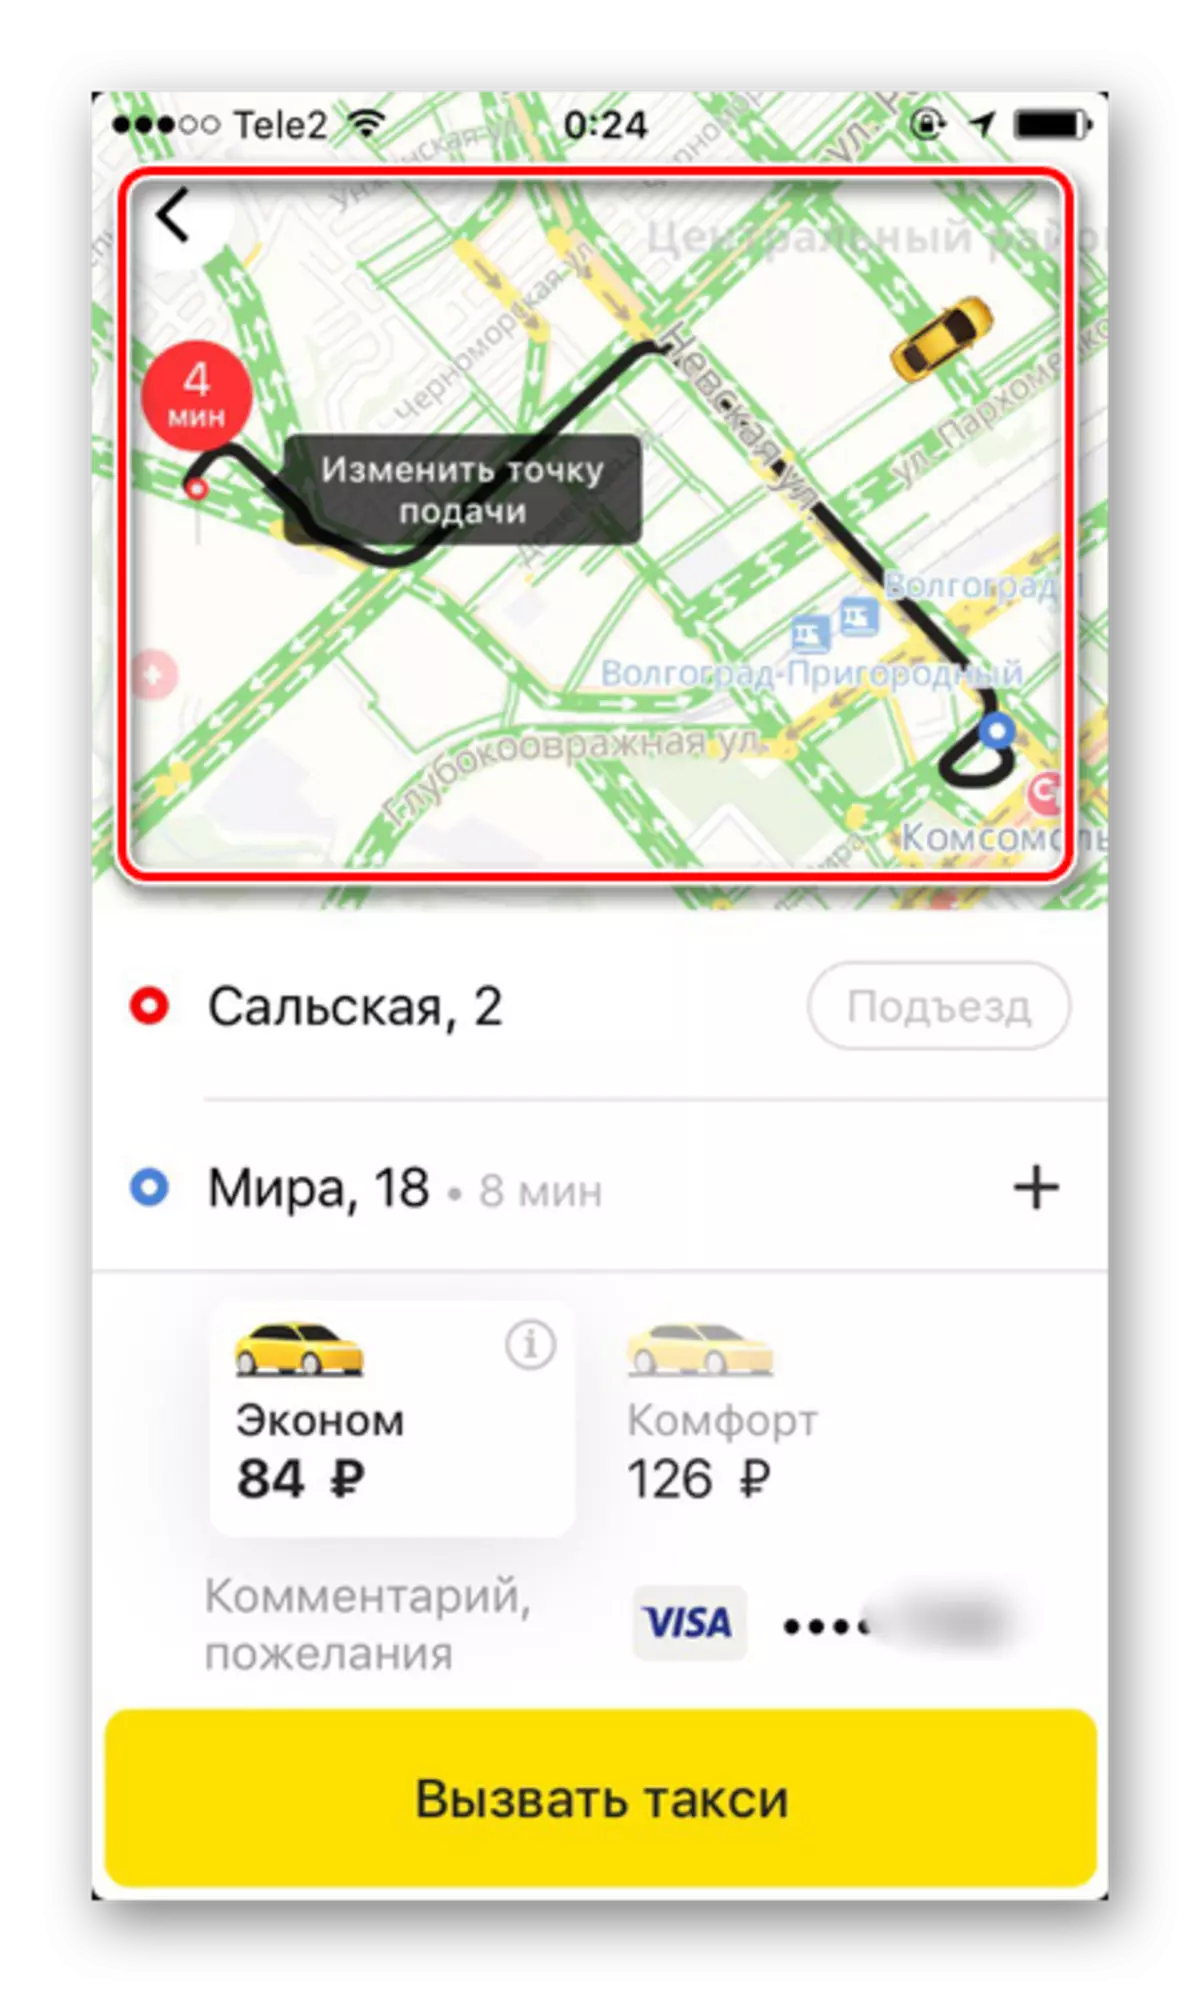 Predified route in Yandex.taxi-applicatie op de iPhone